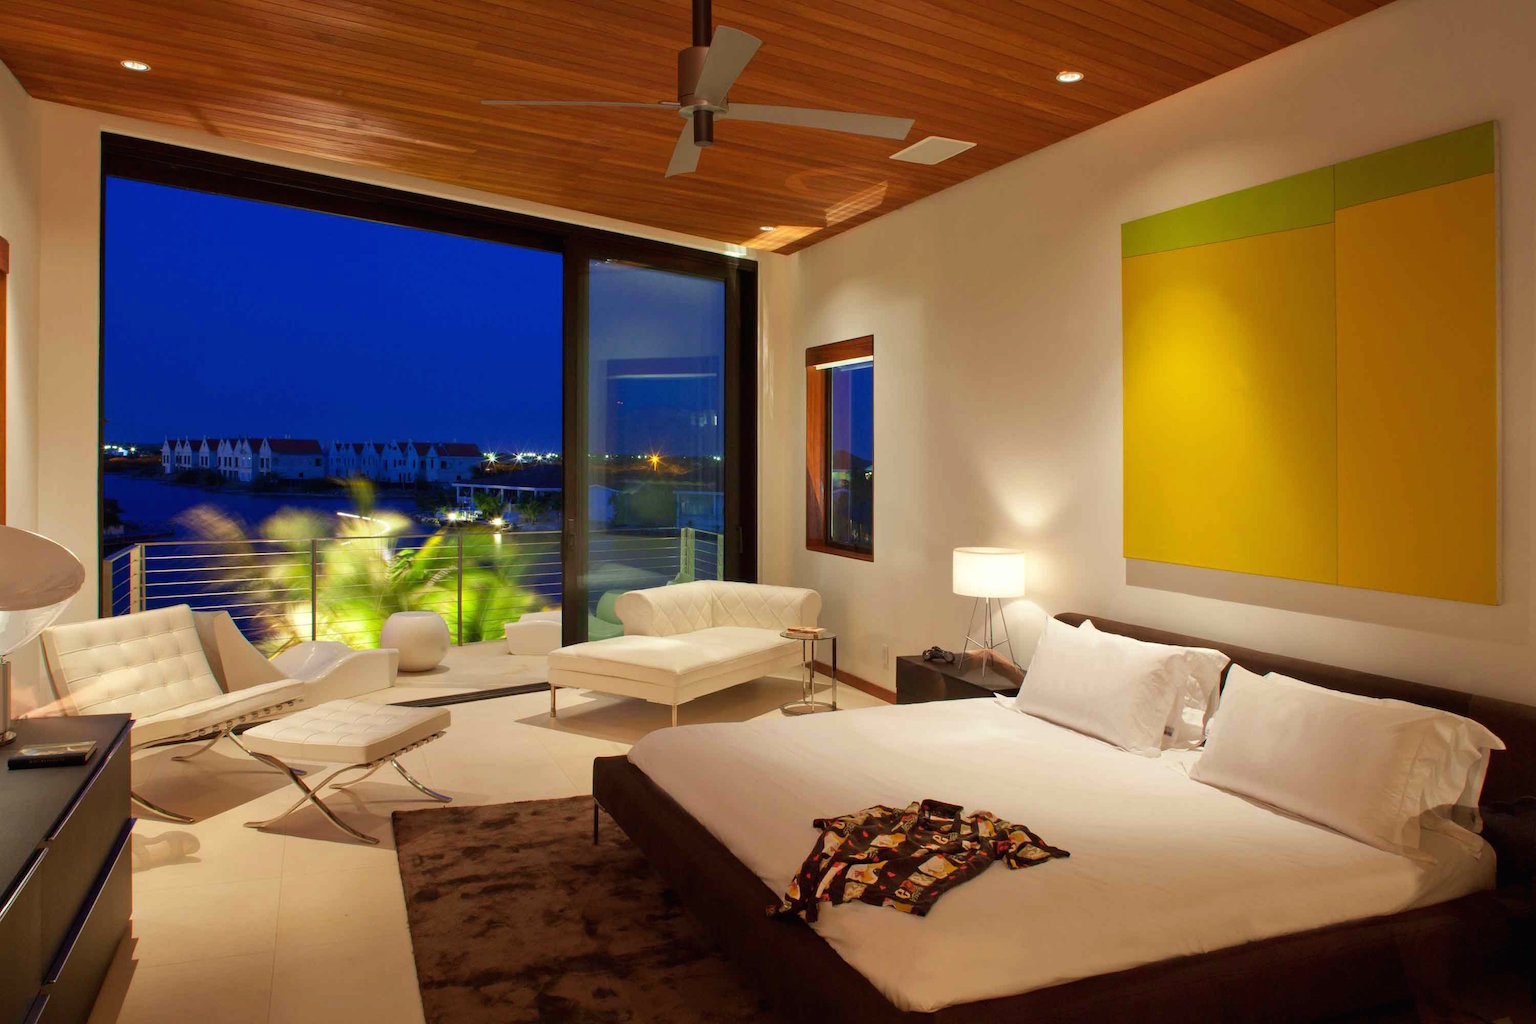 bedroom-modern-mansion-master-bedroom-with-tv-good-galleries-master-bedroom-ideas-master-bedroom-designs-master-bedroom-colors-master-bedroom-decorating-ideas-master-bedroom